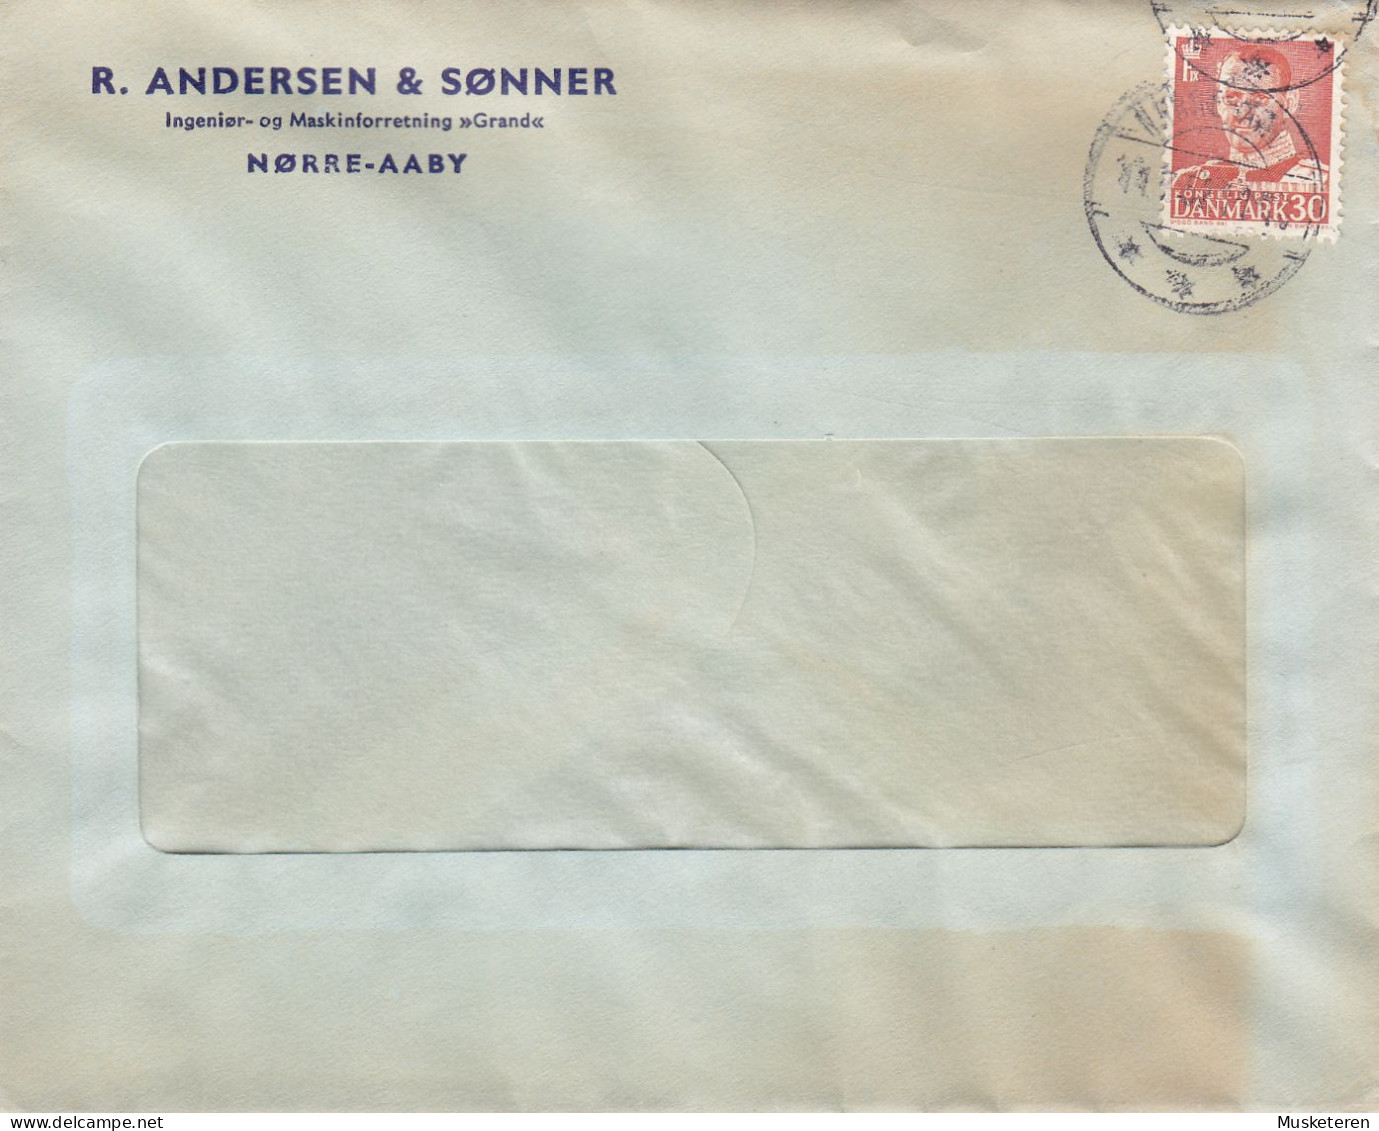 Denmark R. ANDERSEN & SØNNER Ingeniør- Og Maskinforretning 'GRAND' Brotype NØRRE-AABY 1952 Cover Brief Lettre - Lettres & Documents